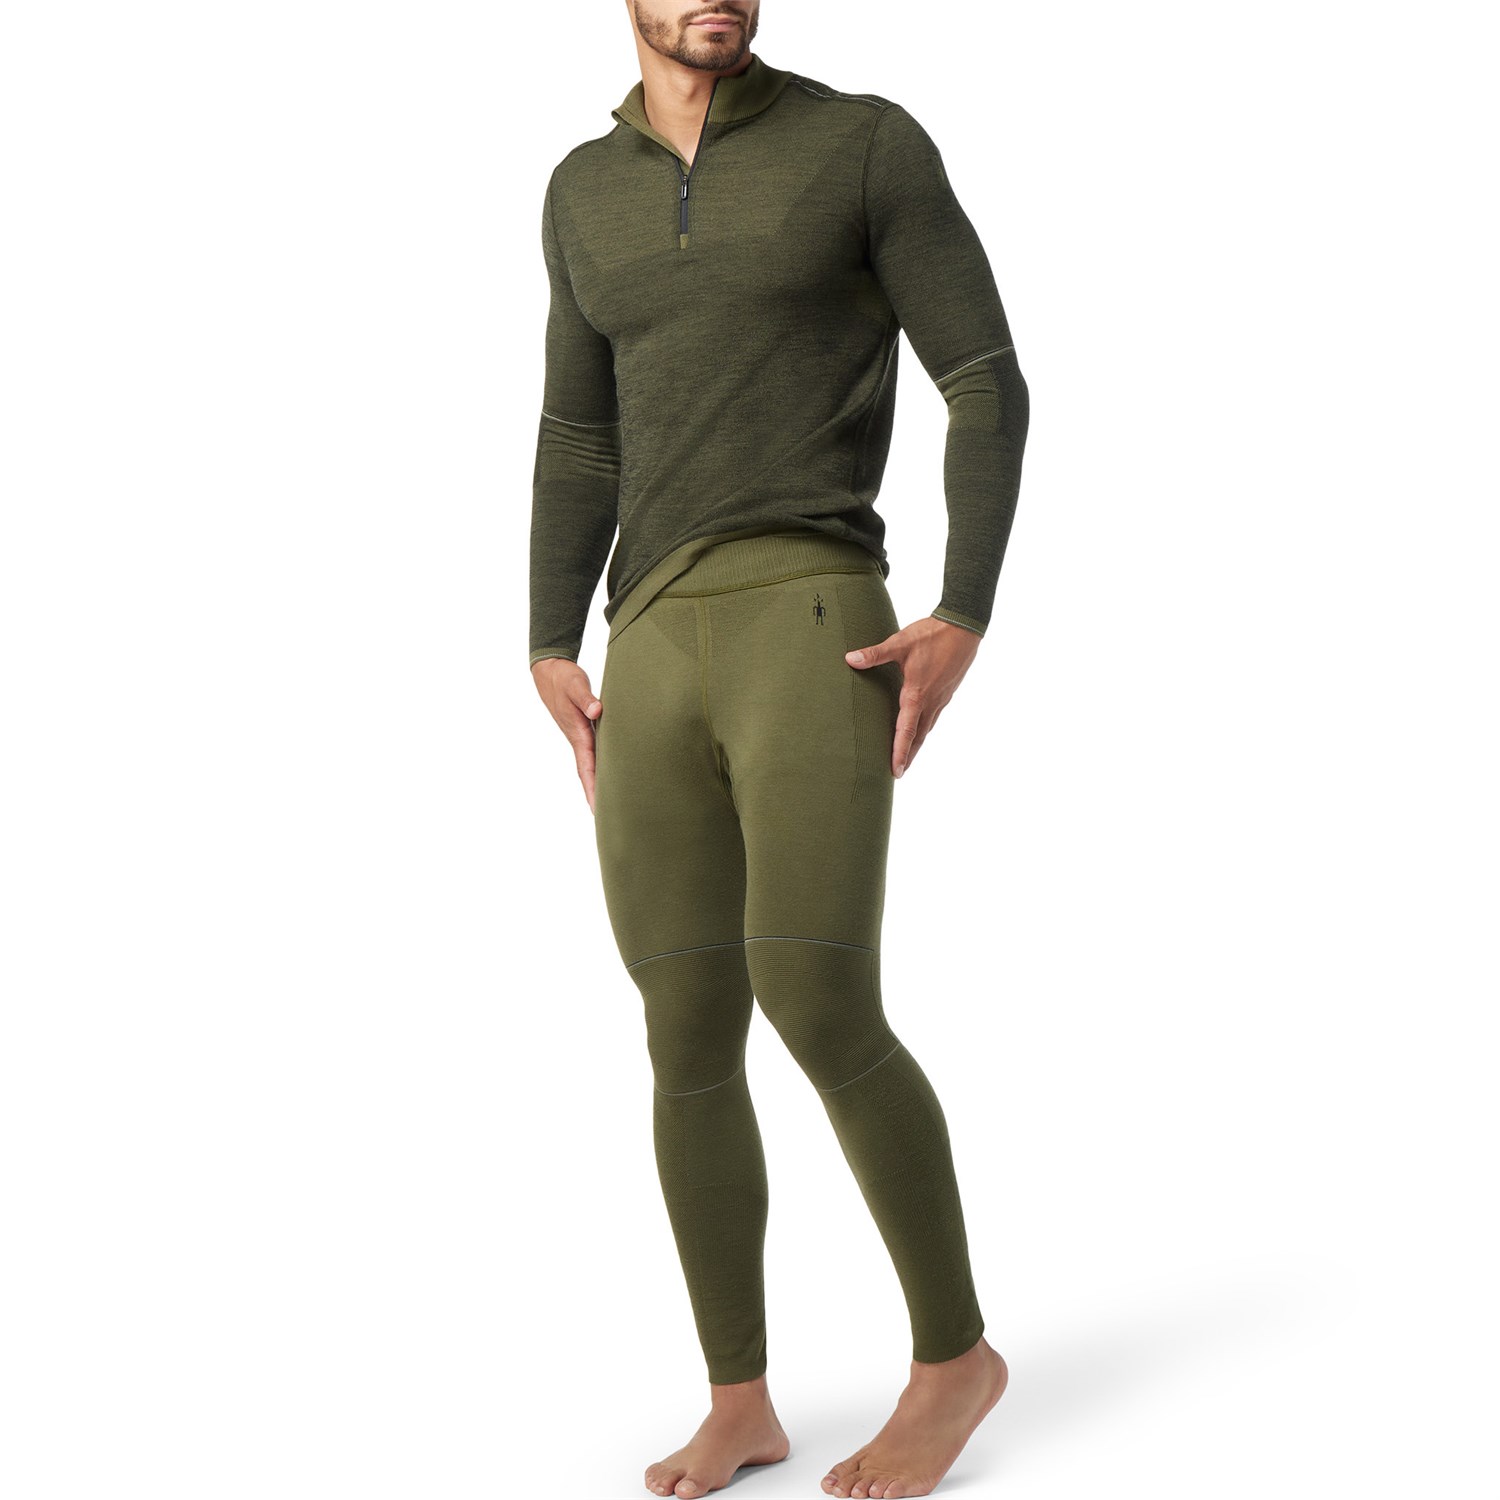 $42 32 Degrees HEAT Underwear Men's Black Thermal Base-Layer Leggings Pants  M